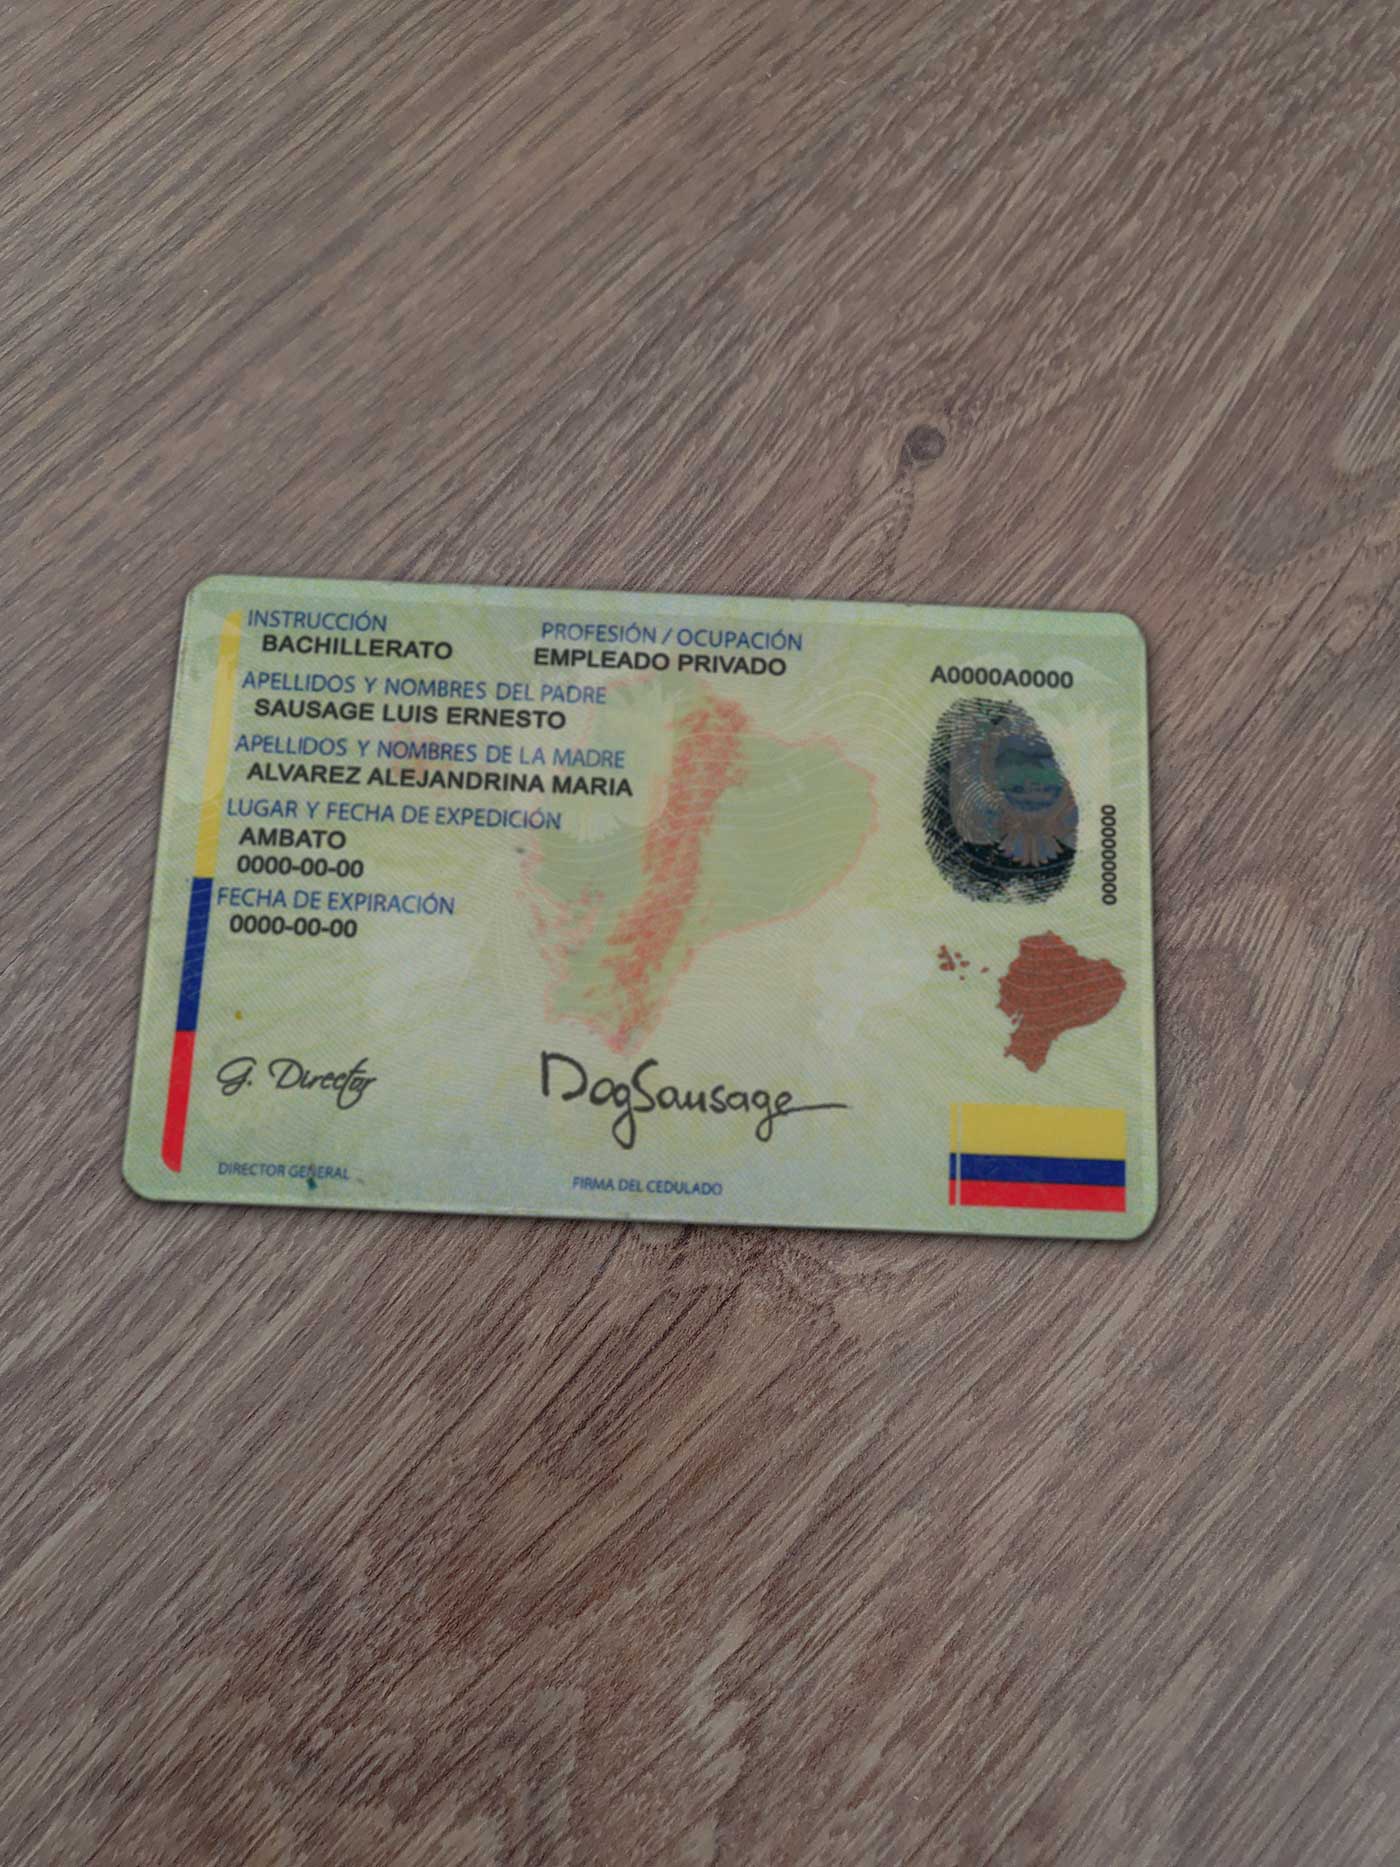 Ecuador Identity Card Template - Driver license template